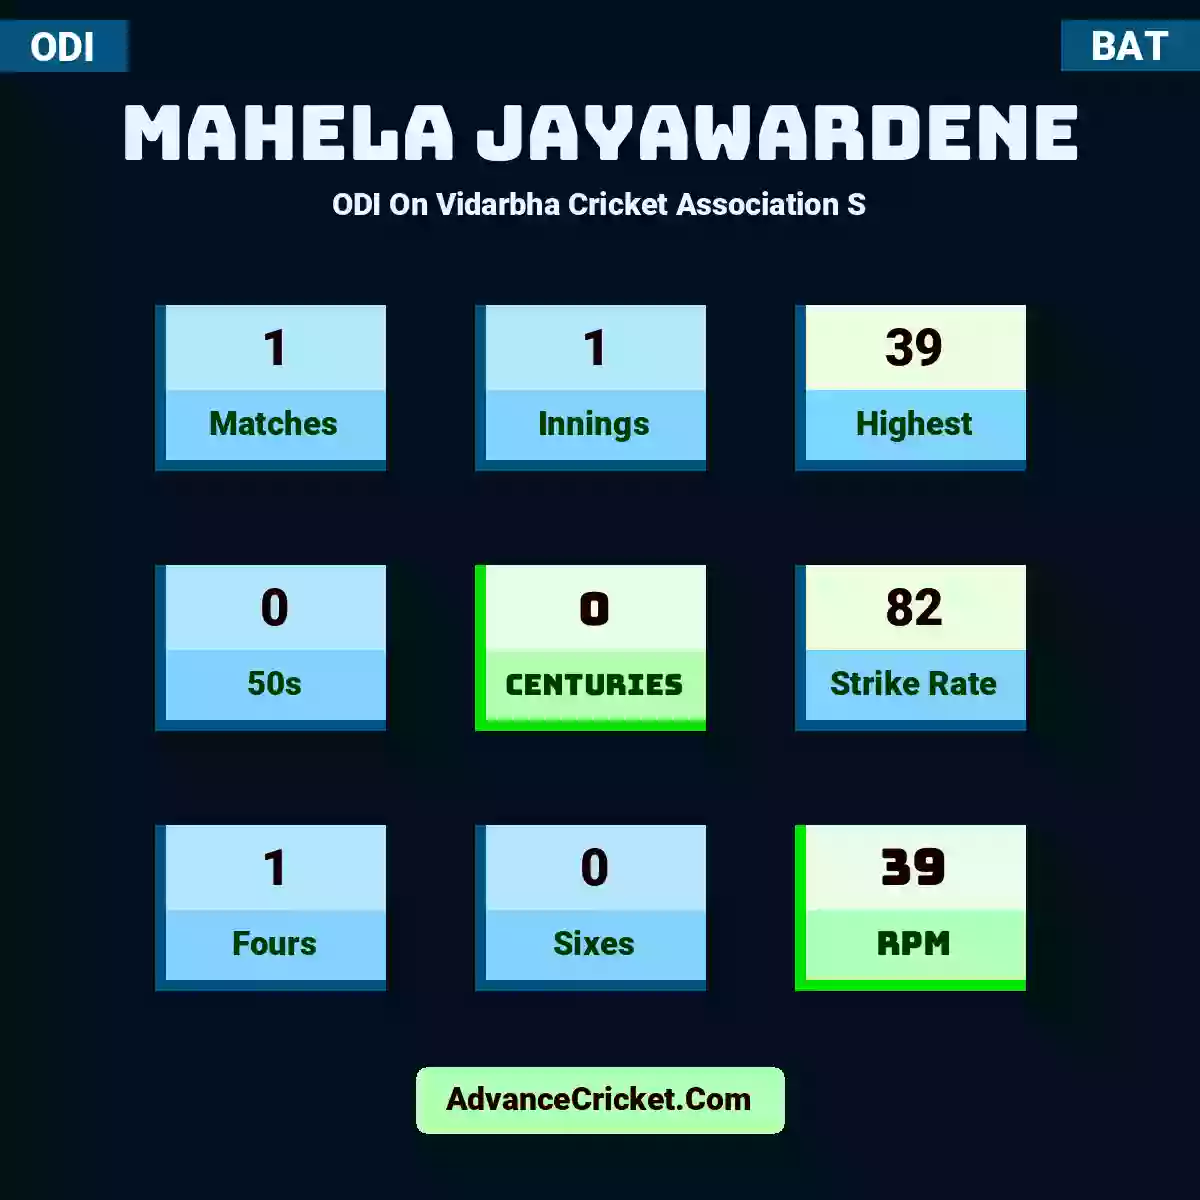 Mahela Jayawardene ODI  On Vidarbha Cricket Association S, Mahela Jayawardene played 1 matches, scored 39 runs as highest, 0 half-centuries, and 0 centuries, with a strike rate of 82. M.Jayawardene hit 1 fours and 0 sixes, with an RPM of 39.